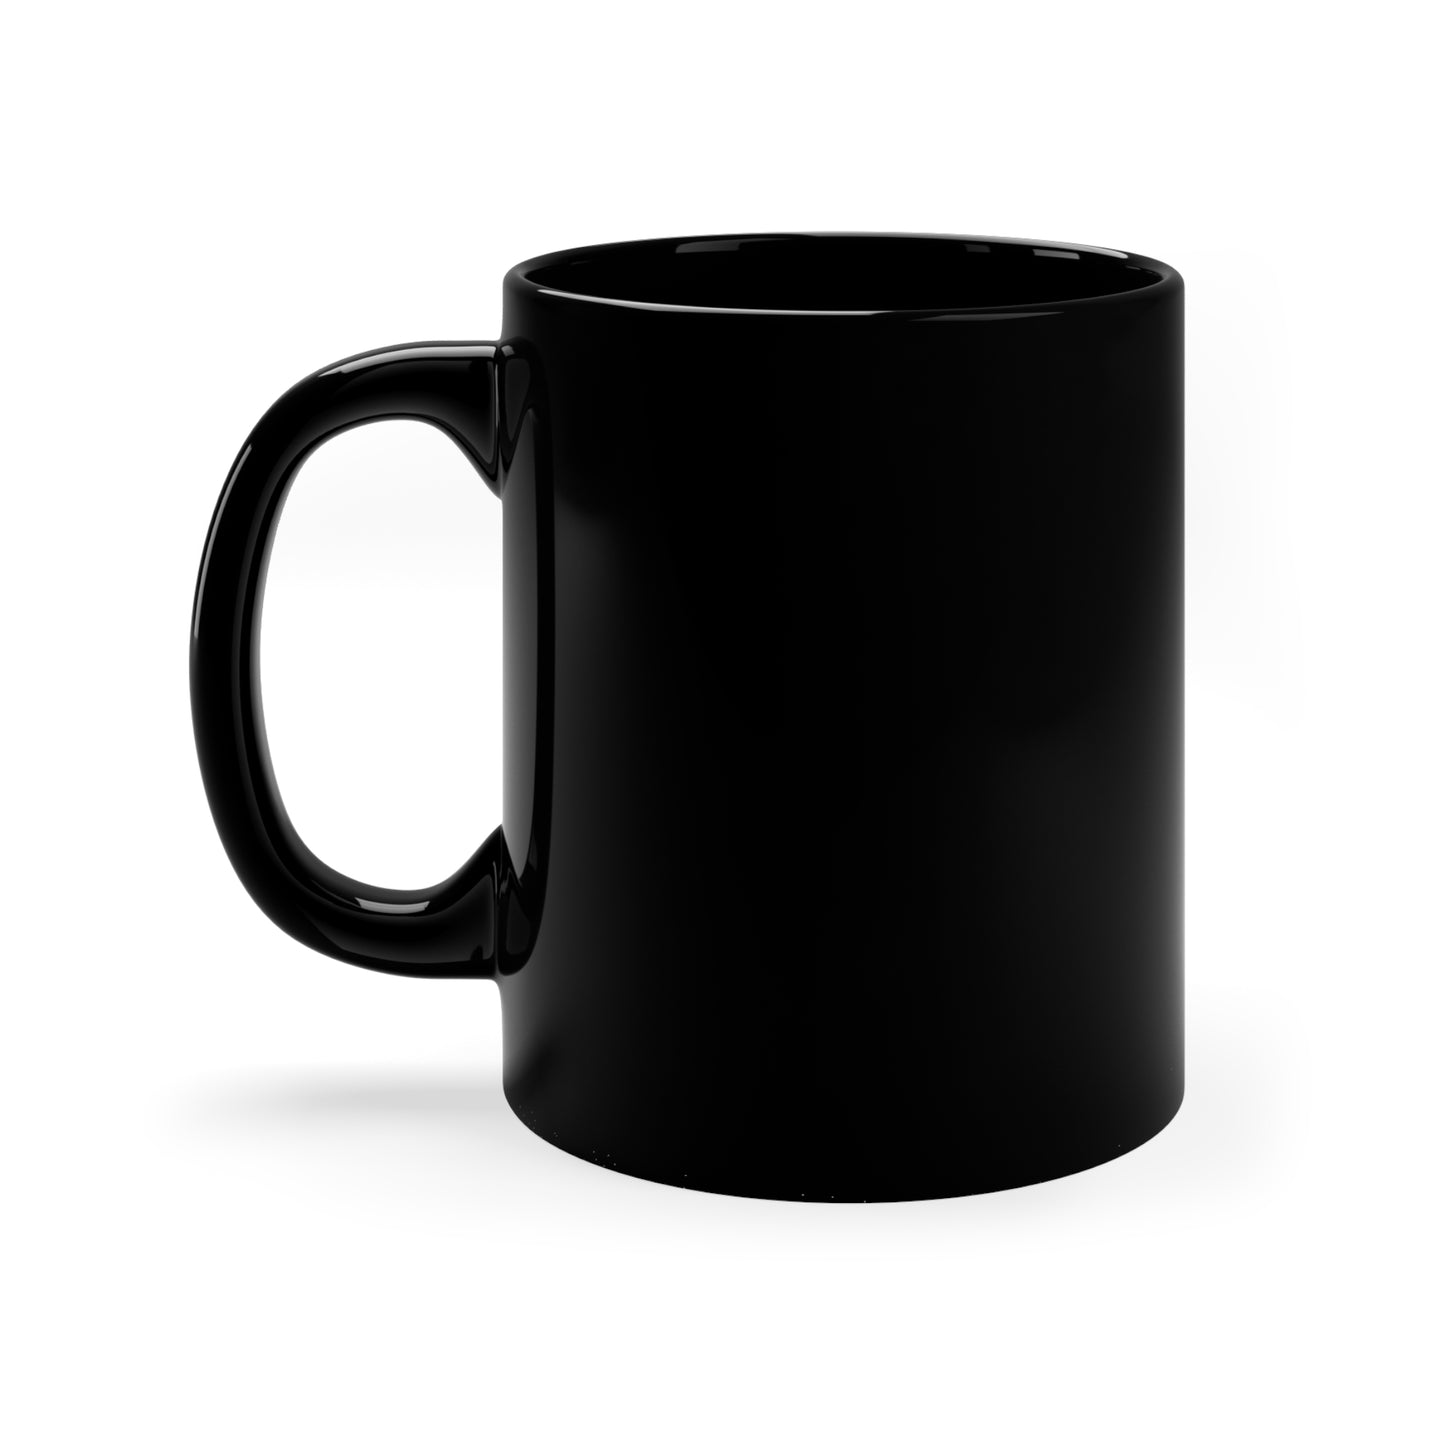 Pray About Everything Ceramic Mug Inspirational Mug 11oz Black Mug Coffee Mug